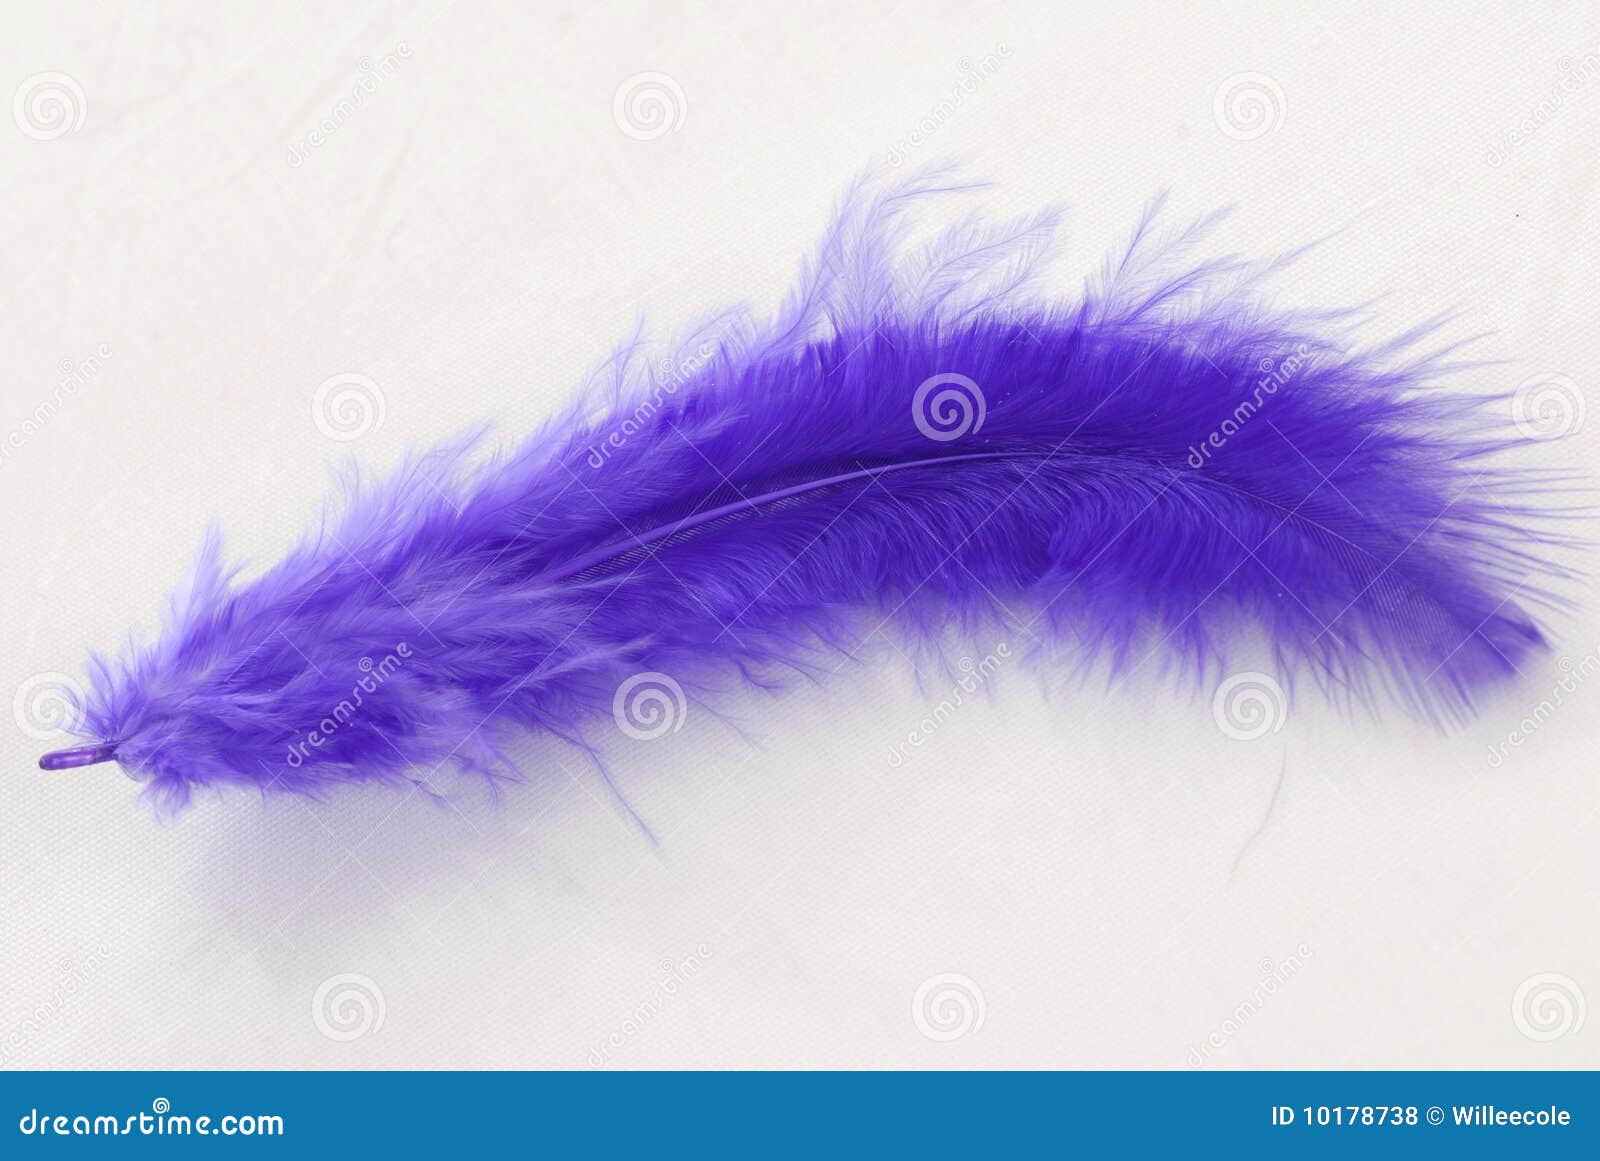 Purple Feathers Stock Photo by ©MichaelFitzsimmons 77597266